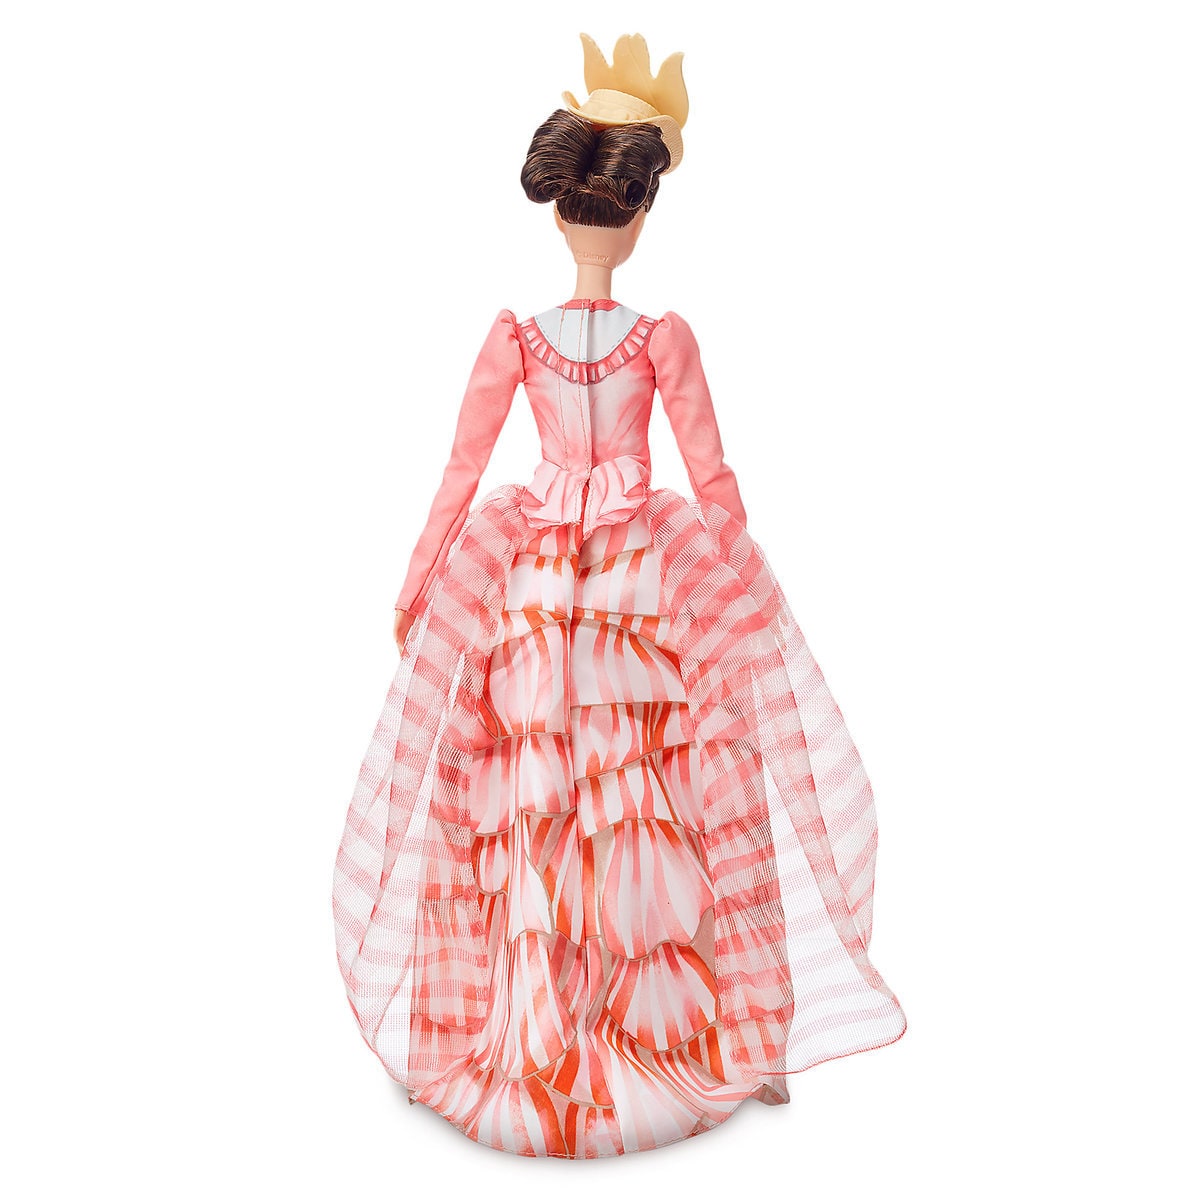 mary poppins returns barbie doll